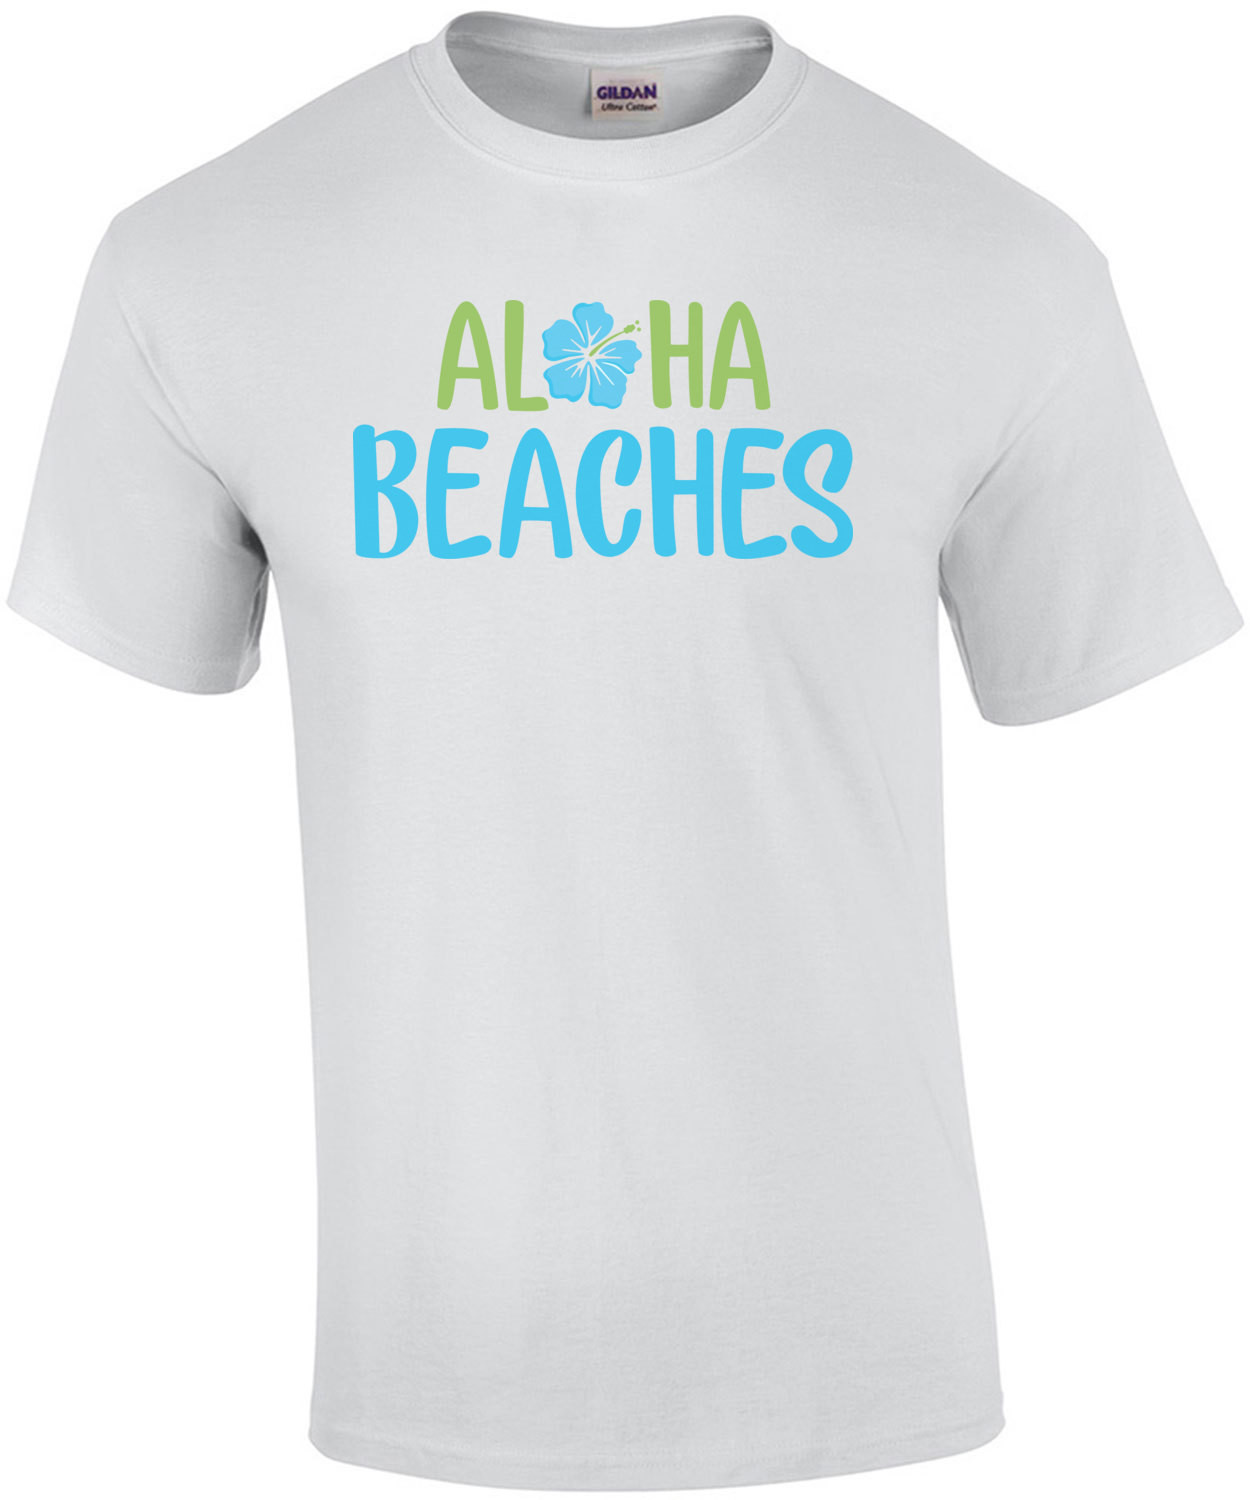 Aloha Beaches - Hawaii T-Shirt